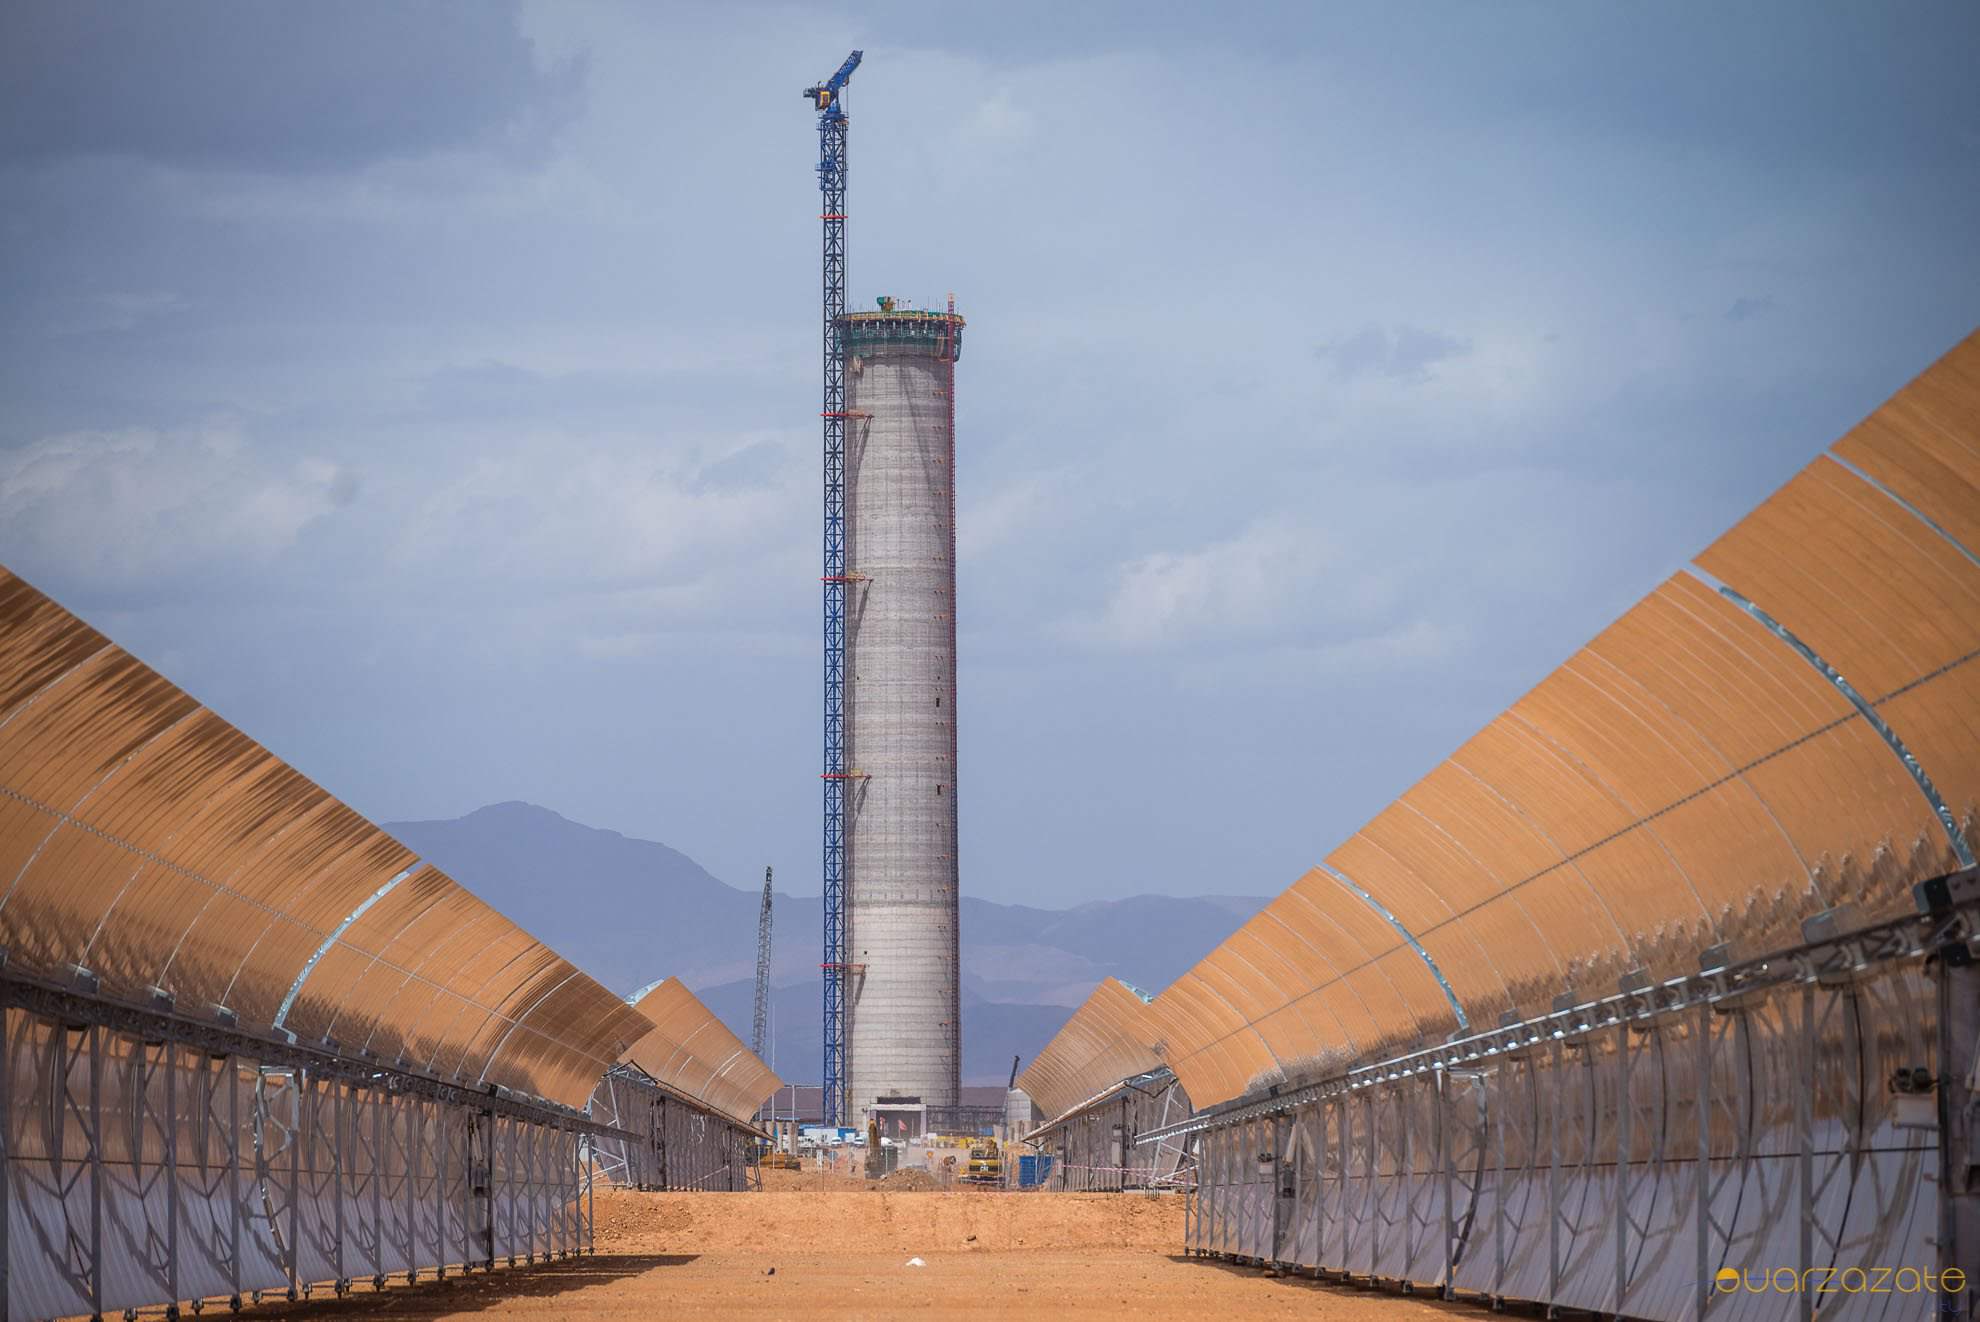 Construction of Ouarzazate solar power station